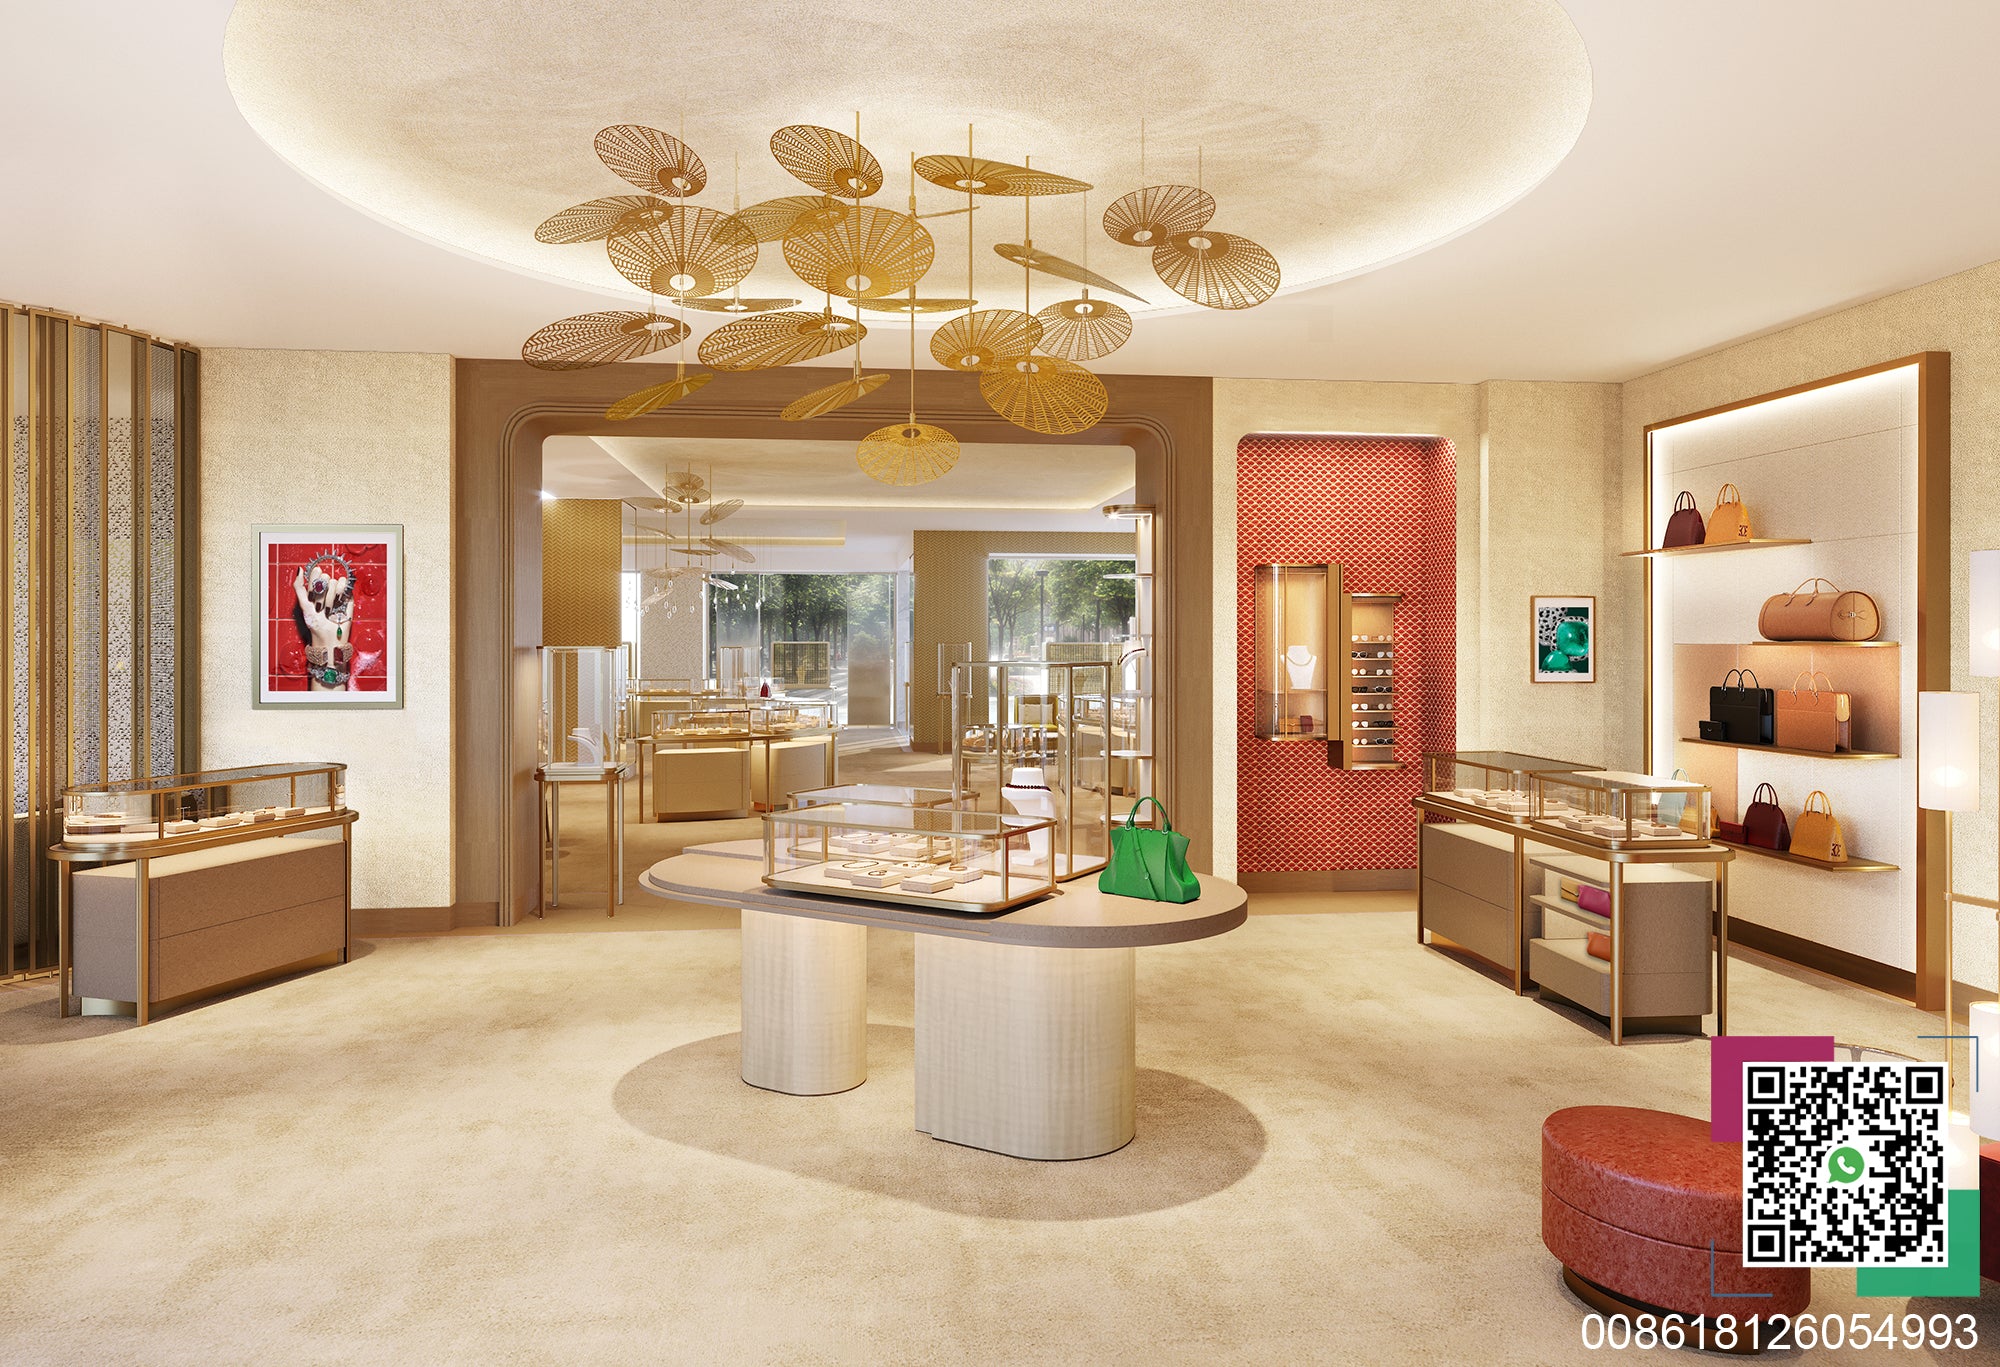 Cartier jewelry store interior design